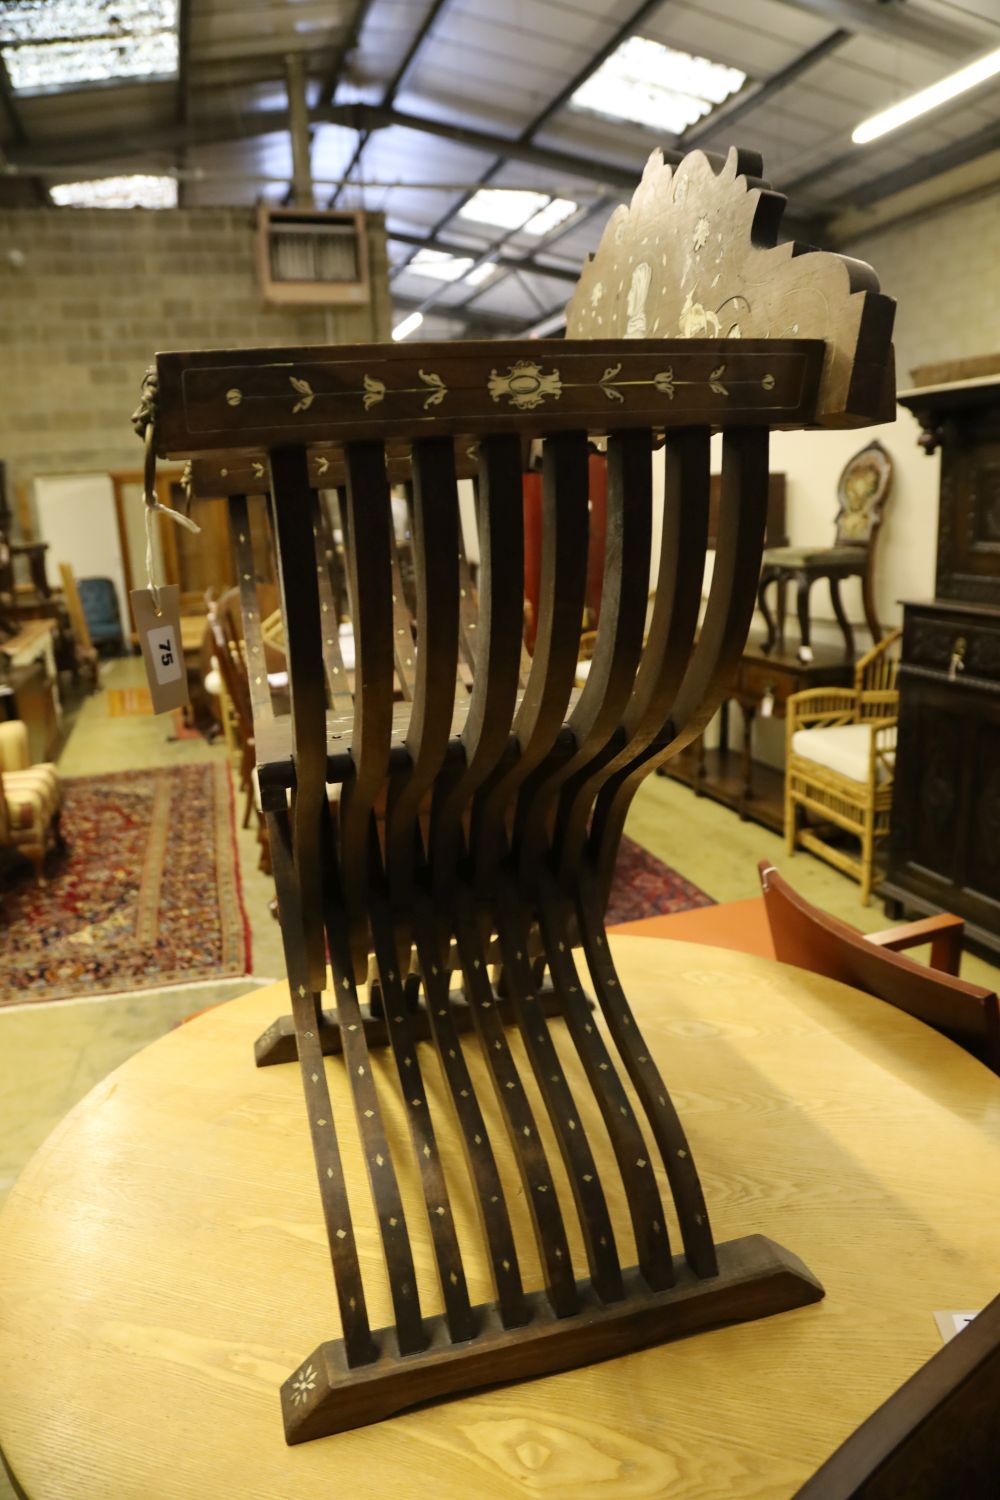 An Italian bone inlaid Savonarola chair, width 72cm